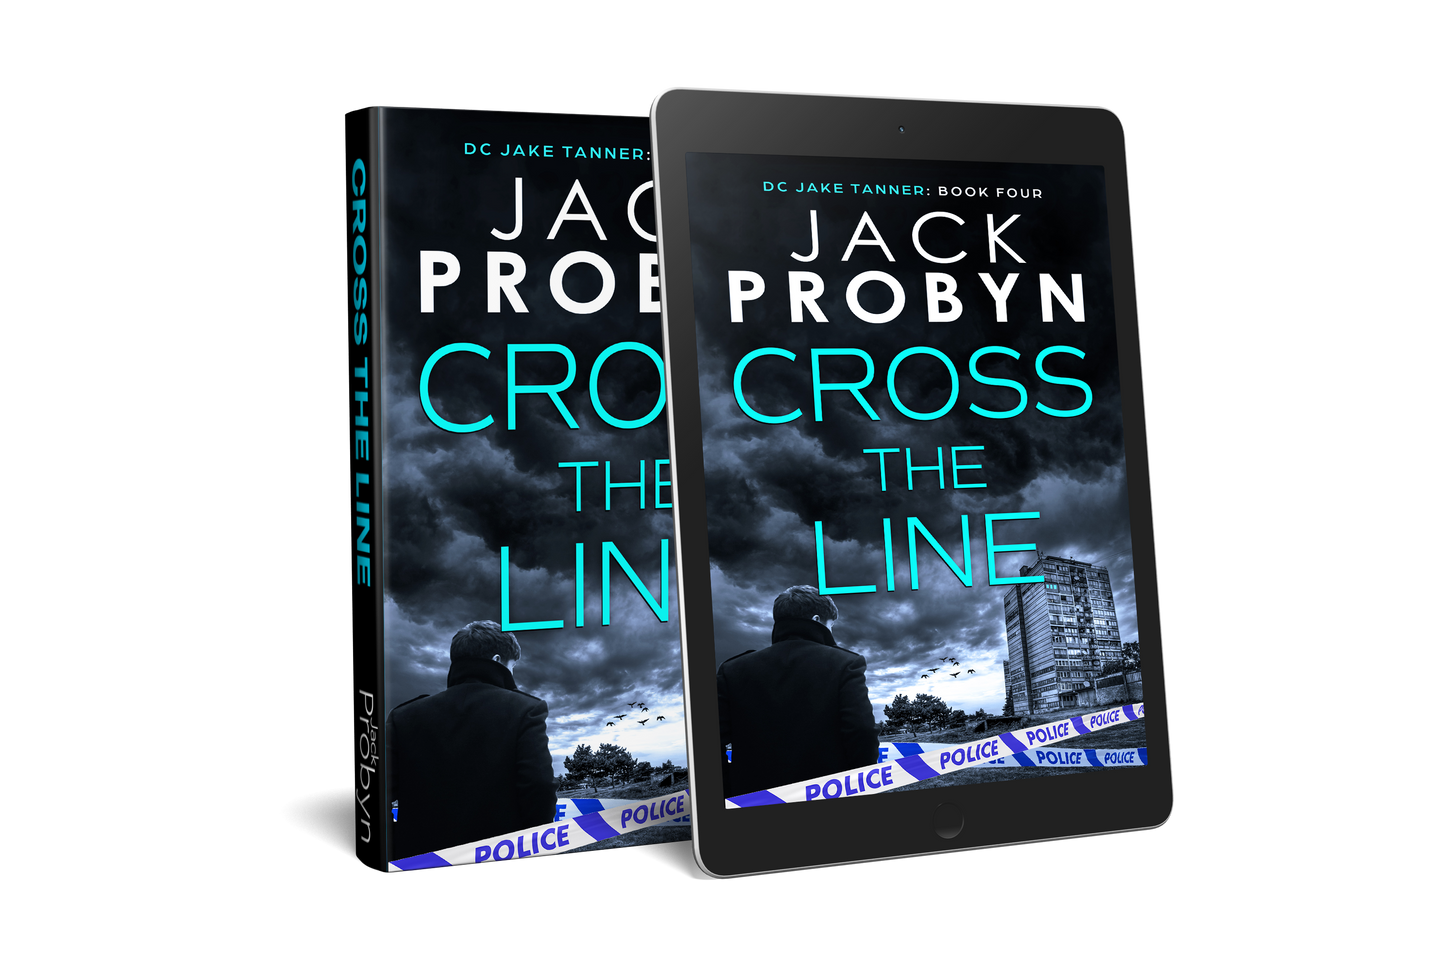 Cross the Line: Book 4